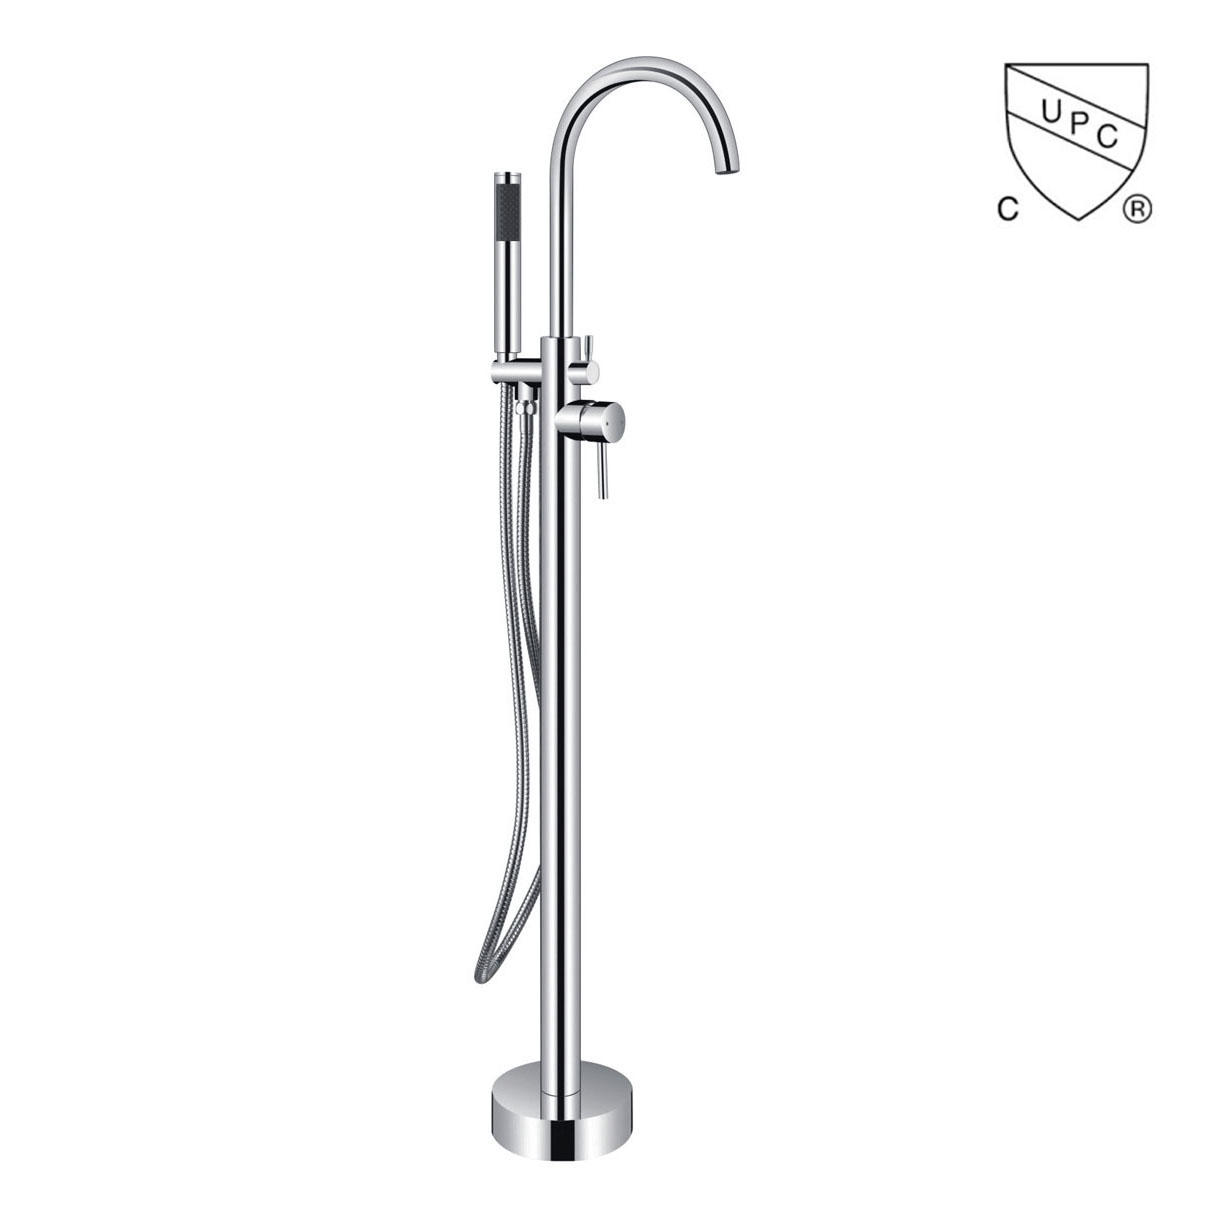 Y0118	UPC, CUPC certified freestanding bathtub faucet, floor mount tub faucet;